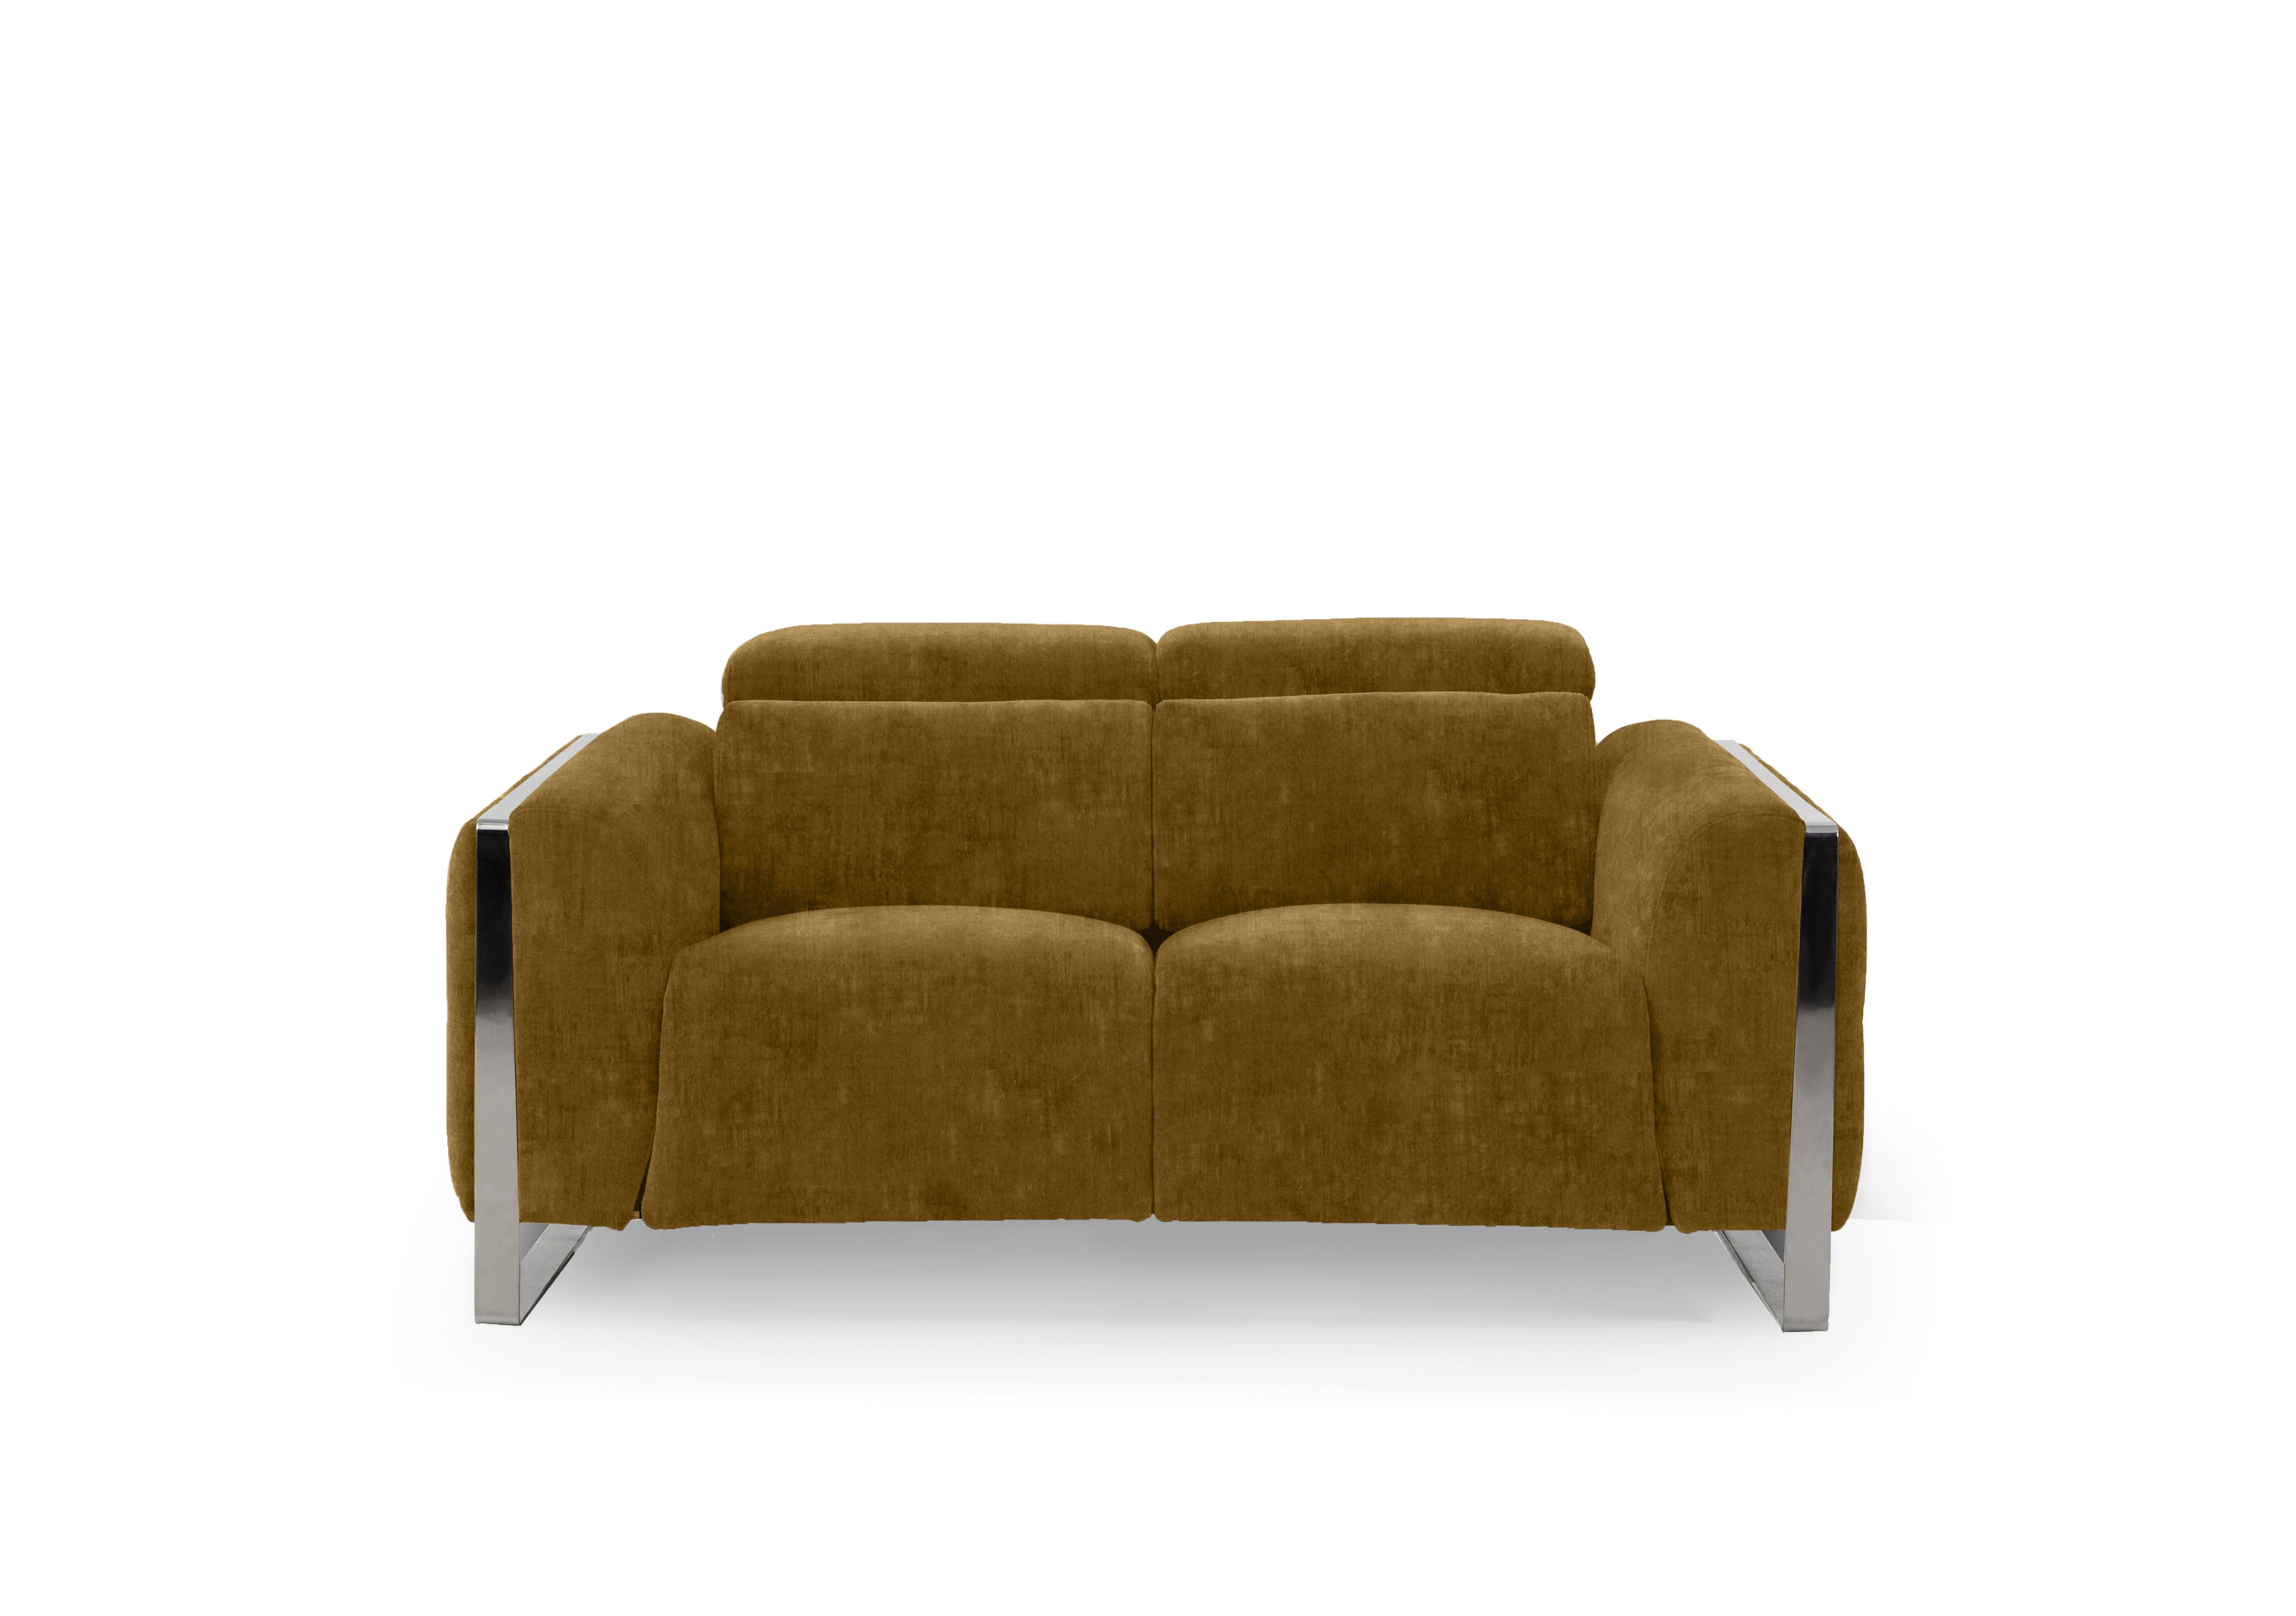 Gisella Fabric 2 Seater Sofa in Heritage Saffron 52002 on Furniture Village